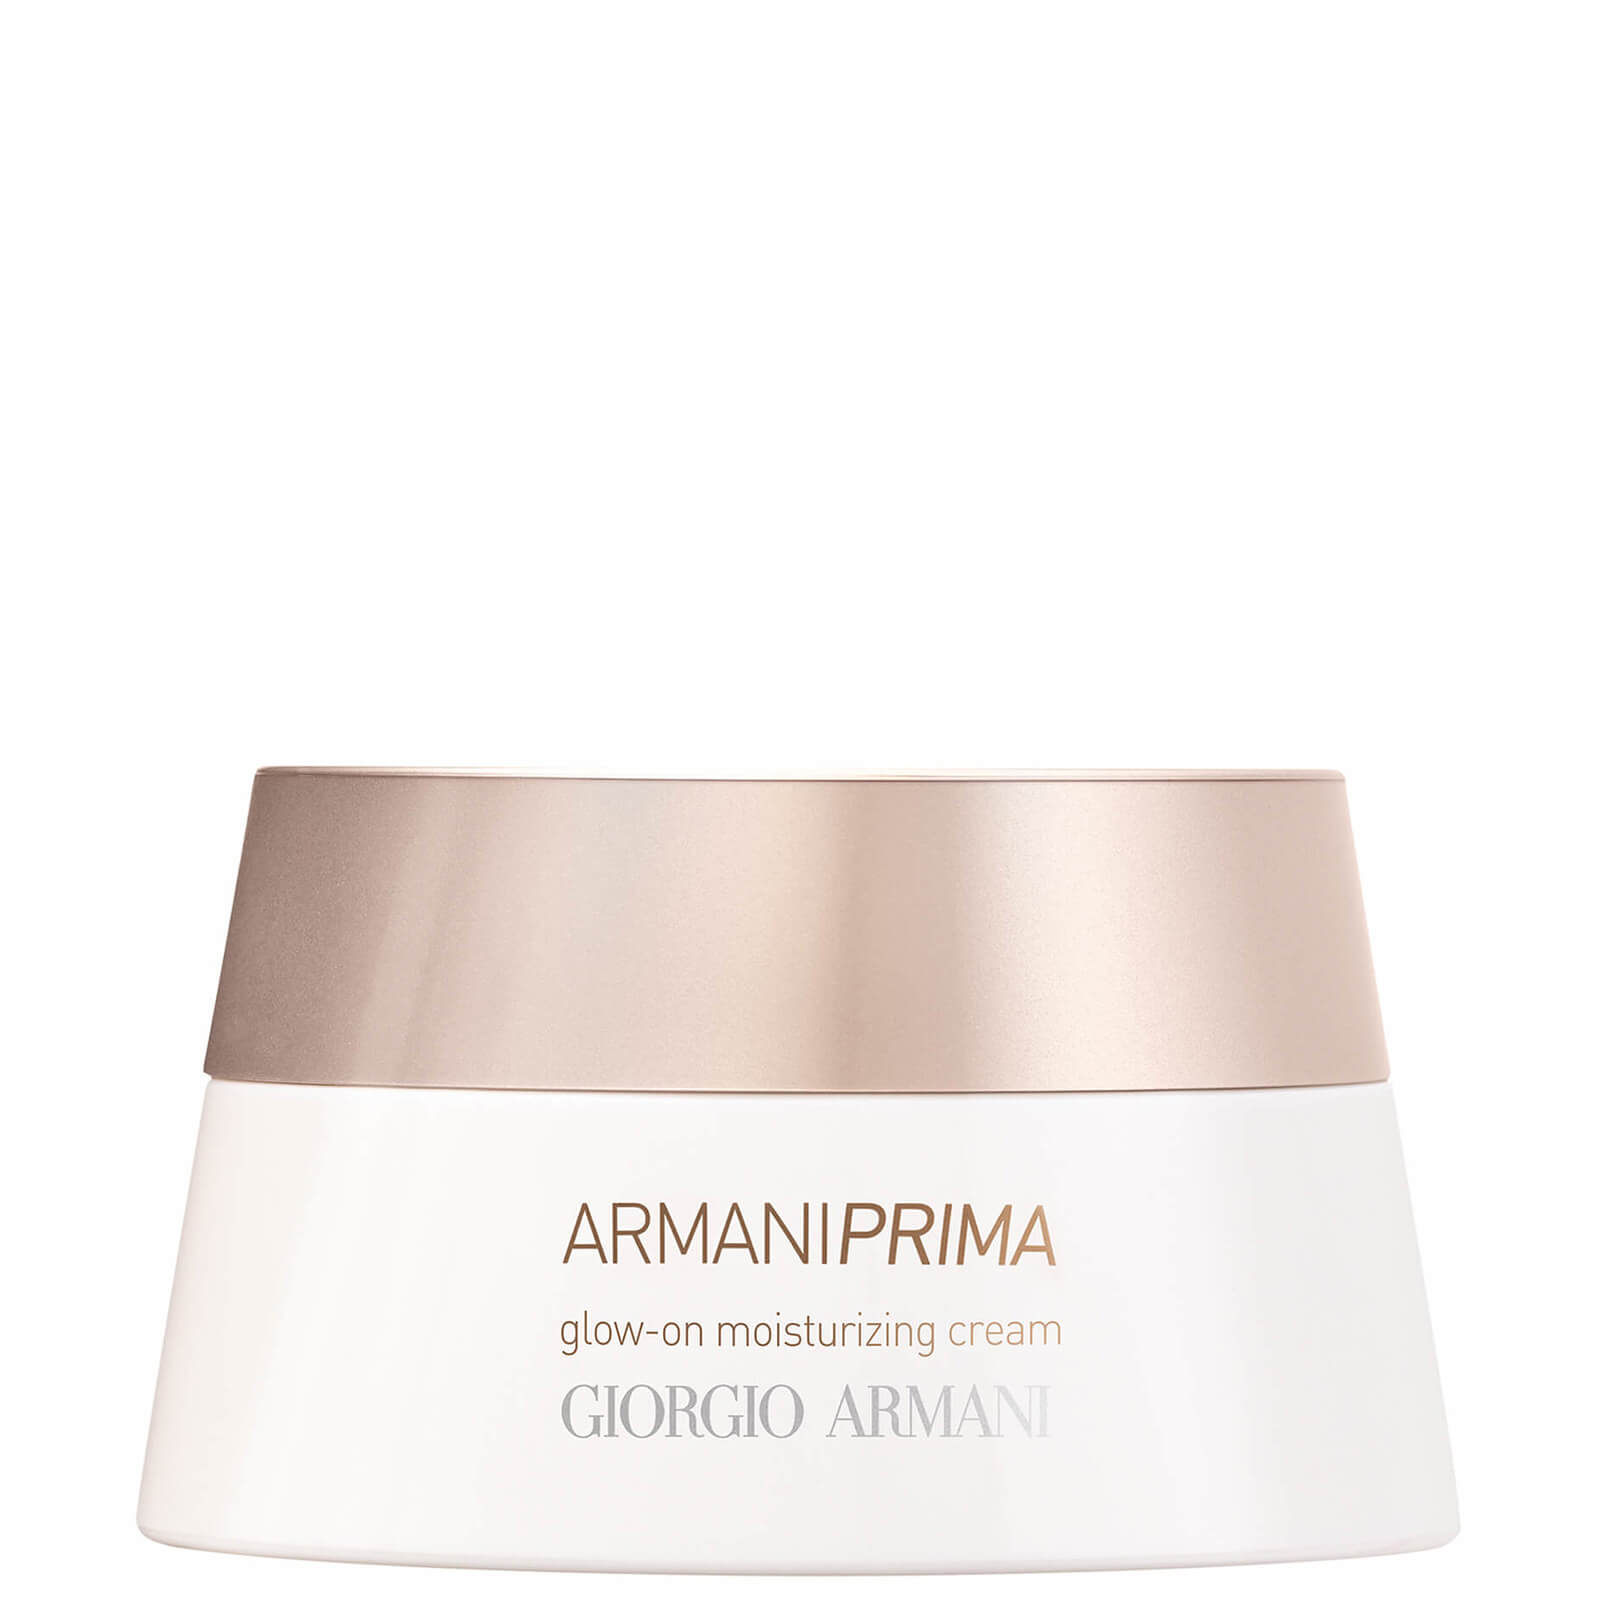 Image of Armani Prima crema 50 g